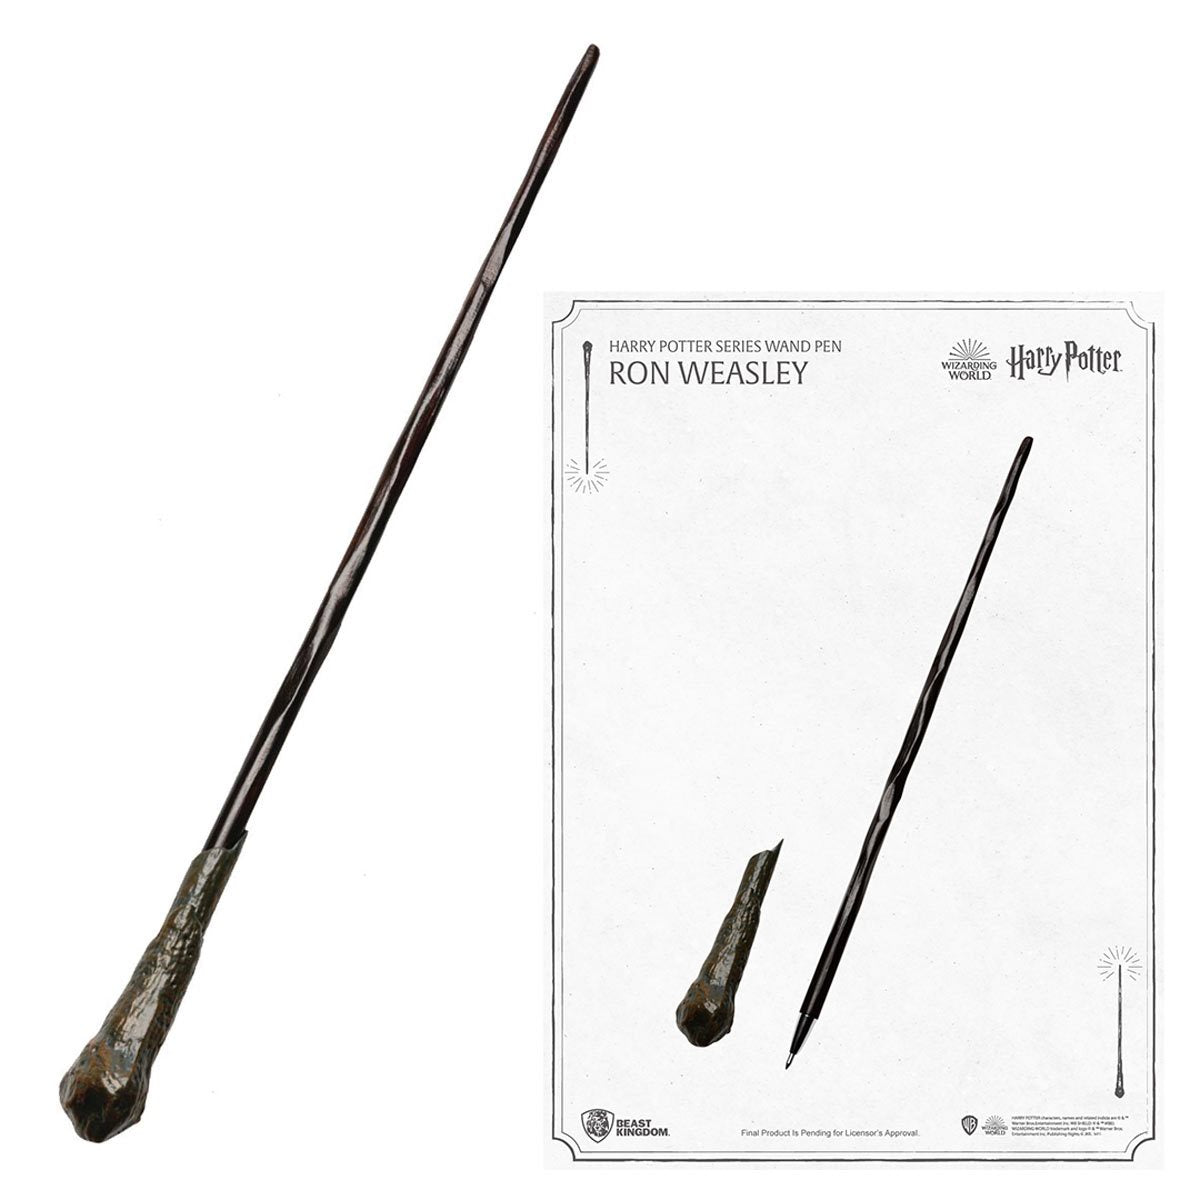 Harry Potter: Wand Pen